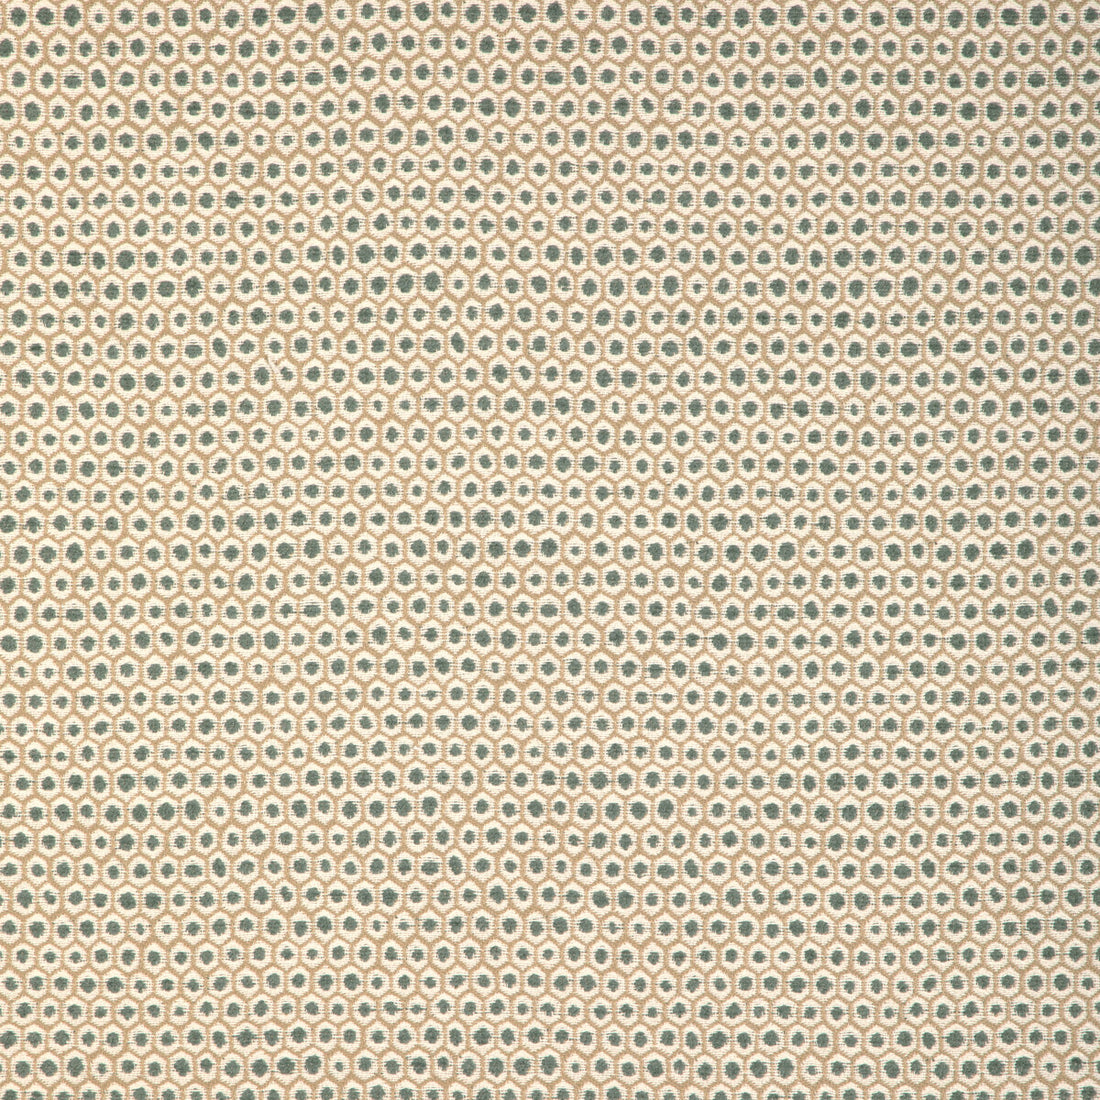 Kravet Smart fabric in 37004-316 color - pattern 37004.316.0 - by Kravet Smart in the Pavilion collection